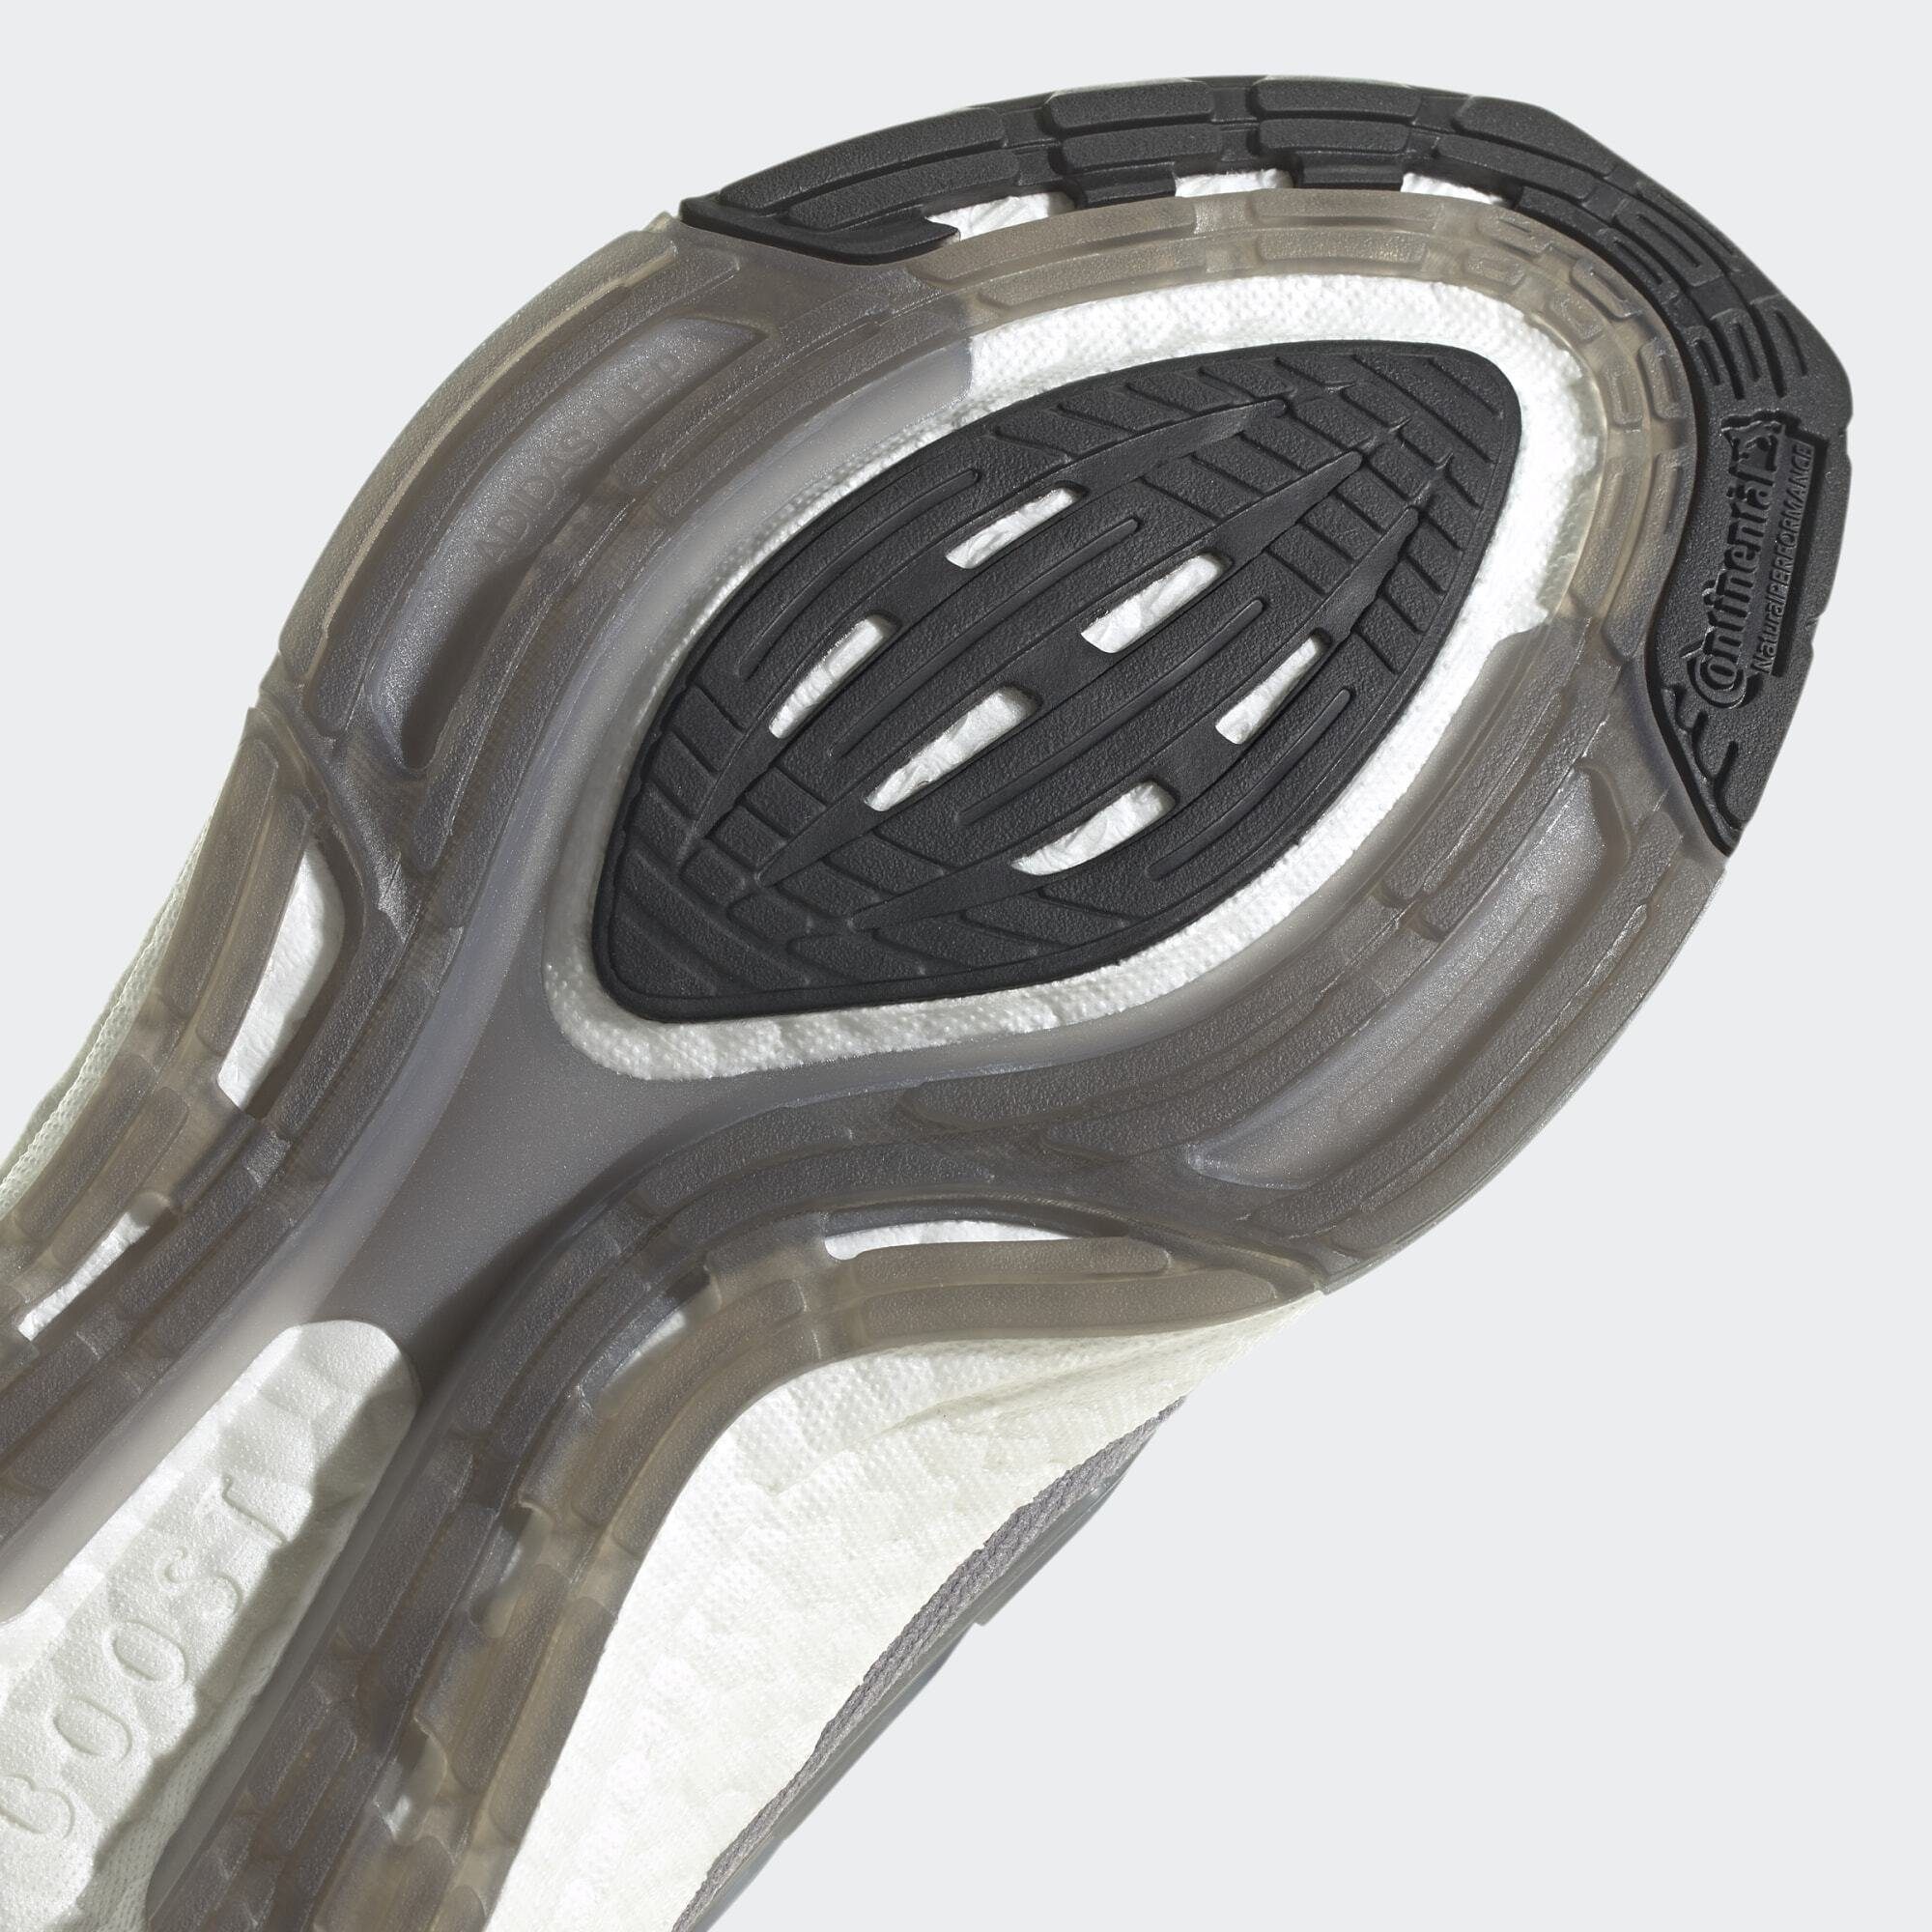 22 Three / Grey Performance Sneaker ULTRABOOST Three Black / Core adidas LAUFSCHUH Grey